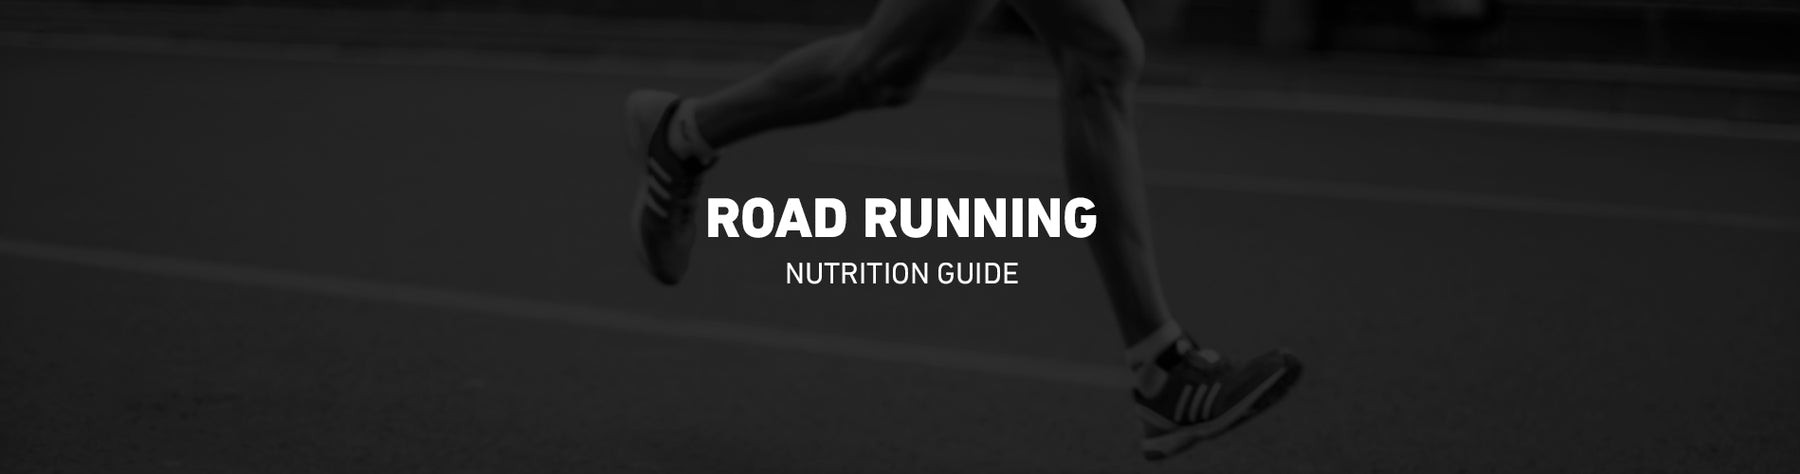 Nutrition Guide - Road Running